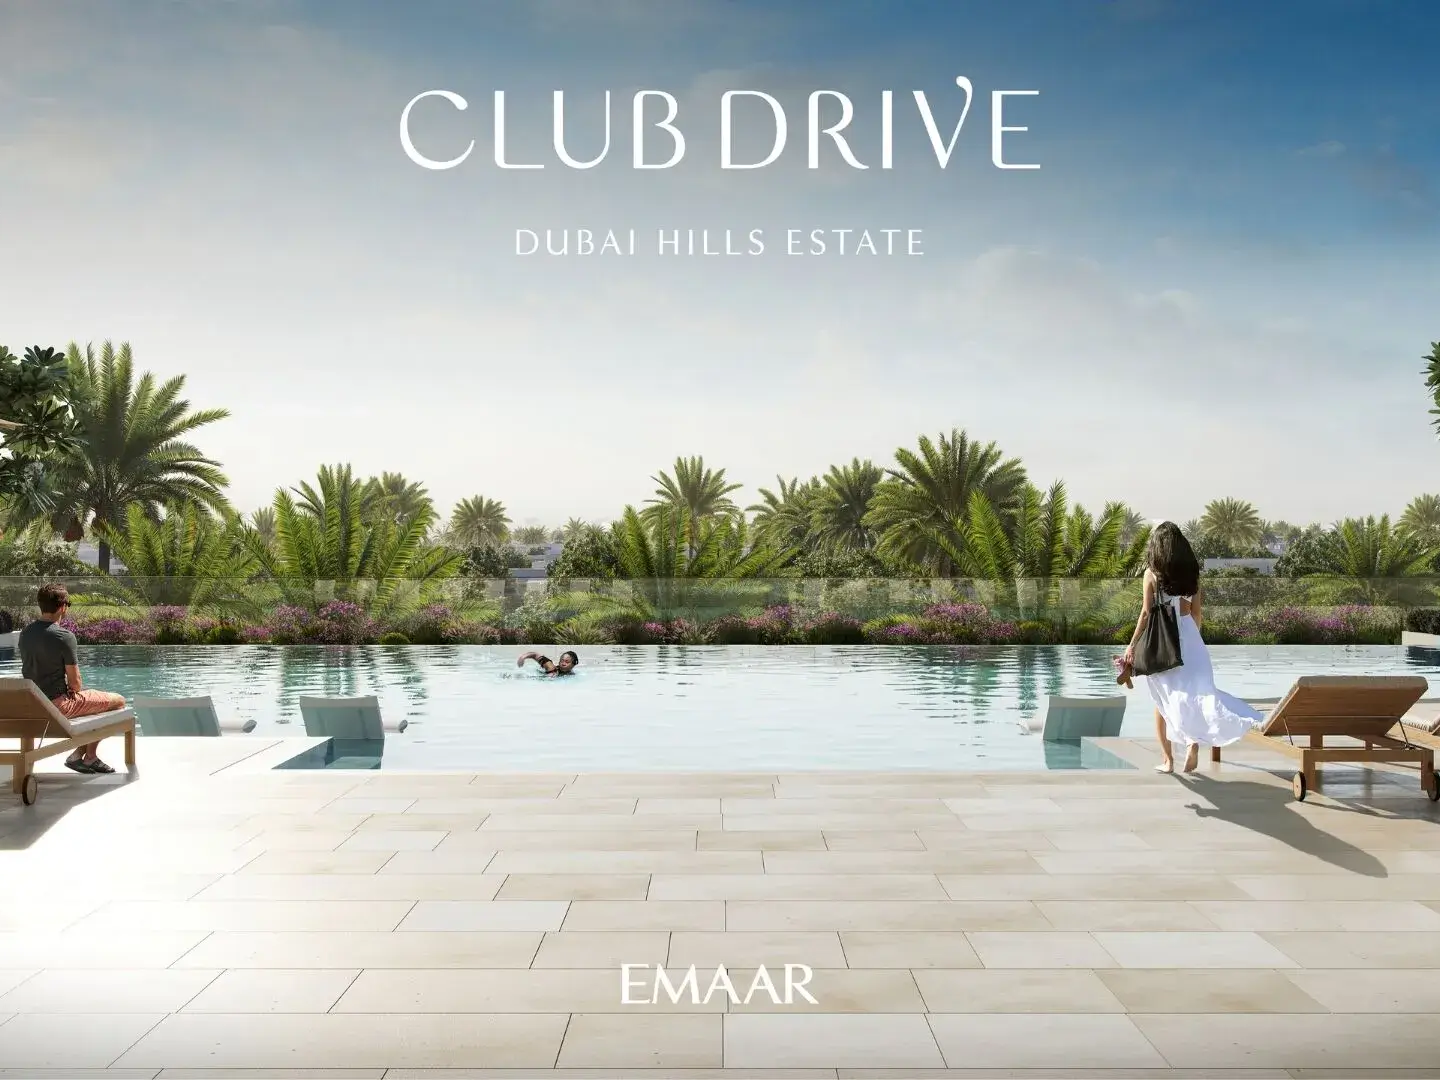 Club drive - Emaar immobilier à Dubai hills estate